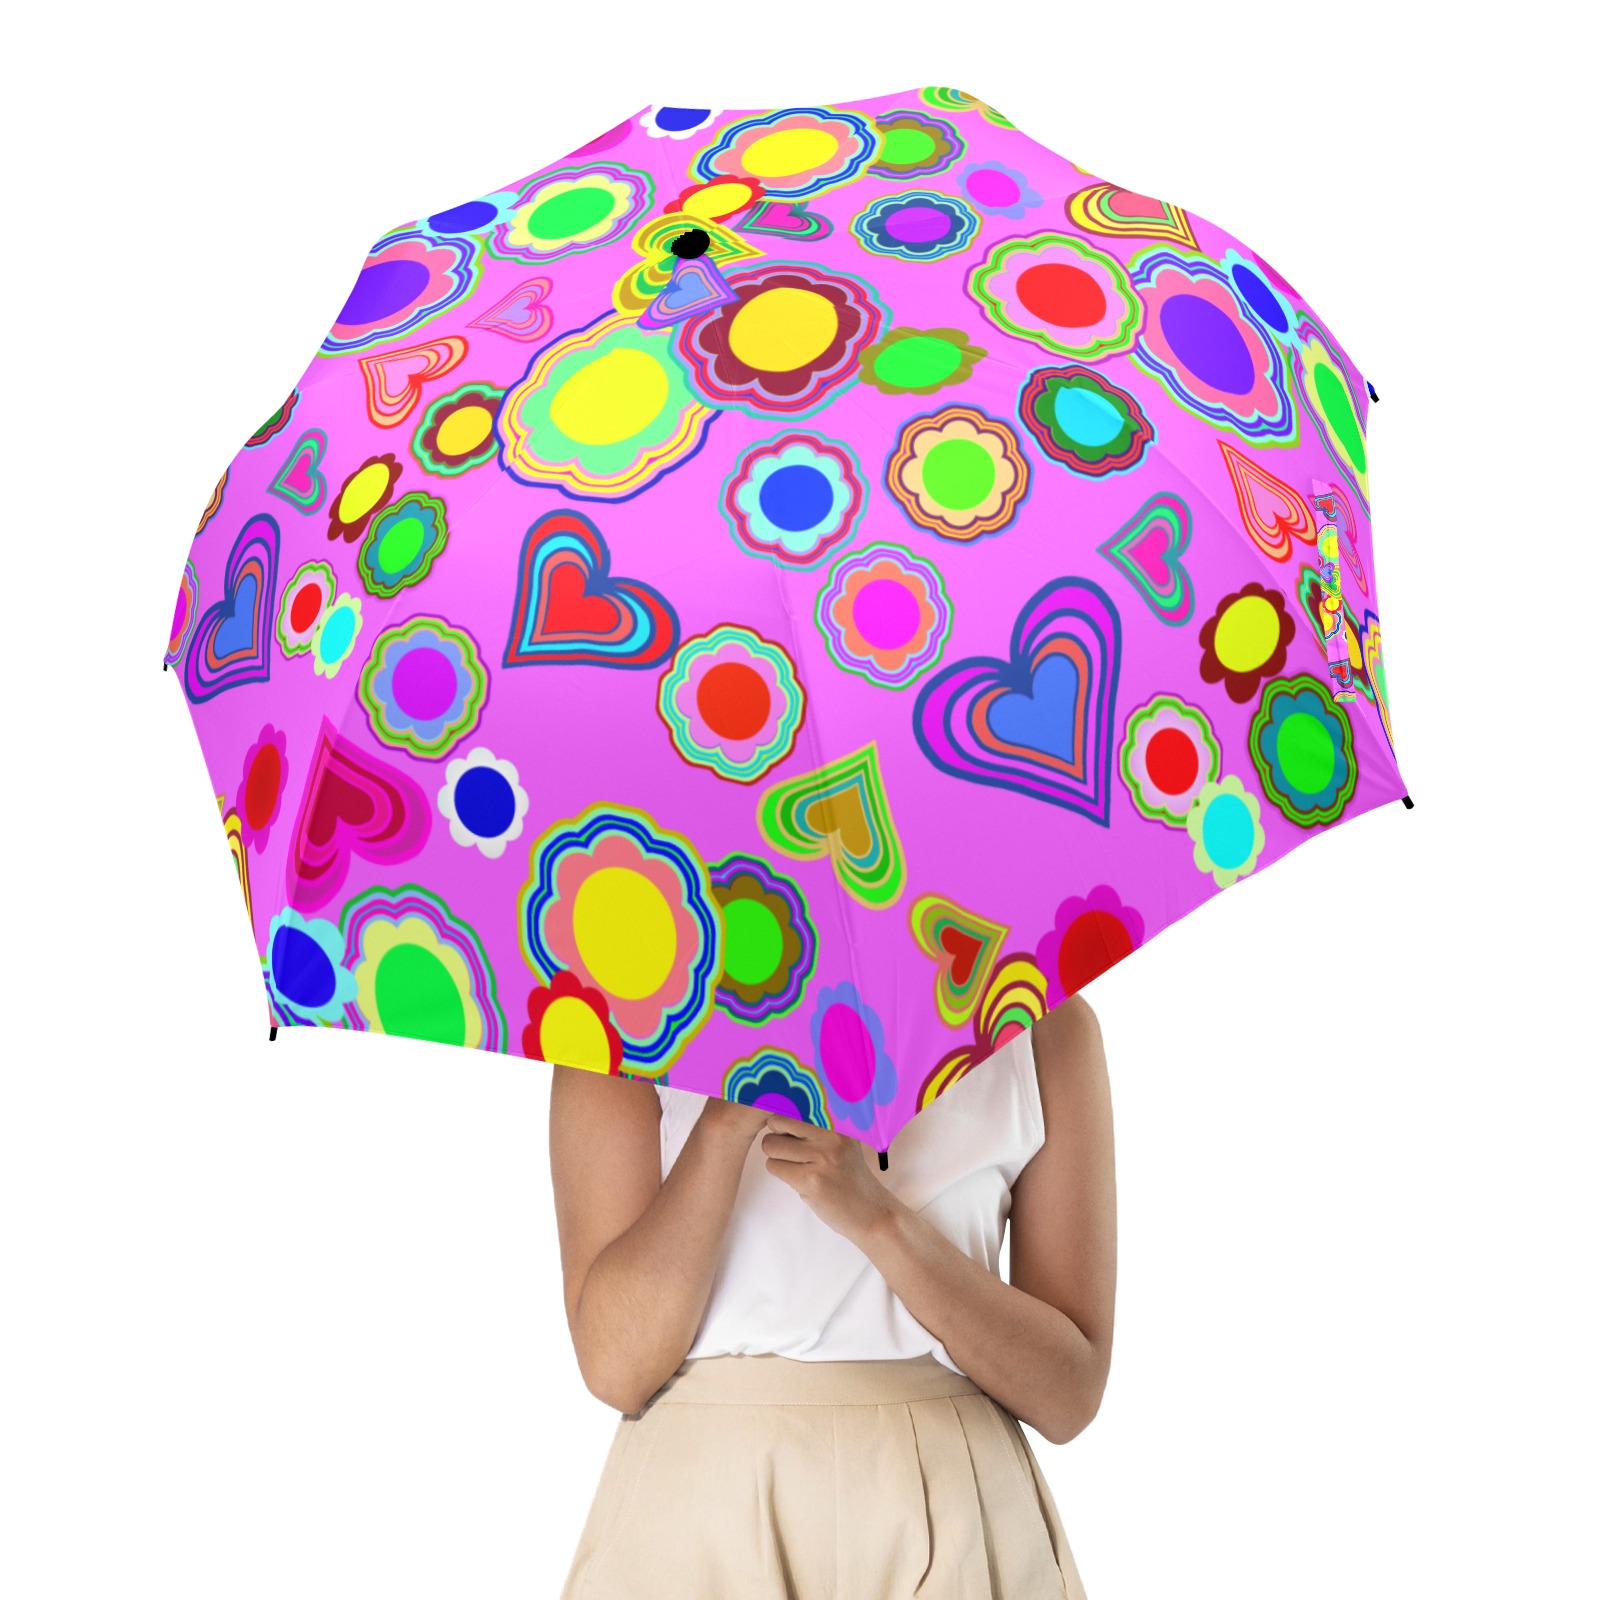 Groovy Hearts and Flowers Pink Semi-Automatic Foldable Umbrella (Model U12)